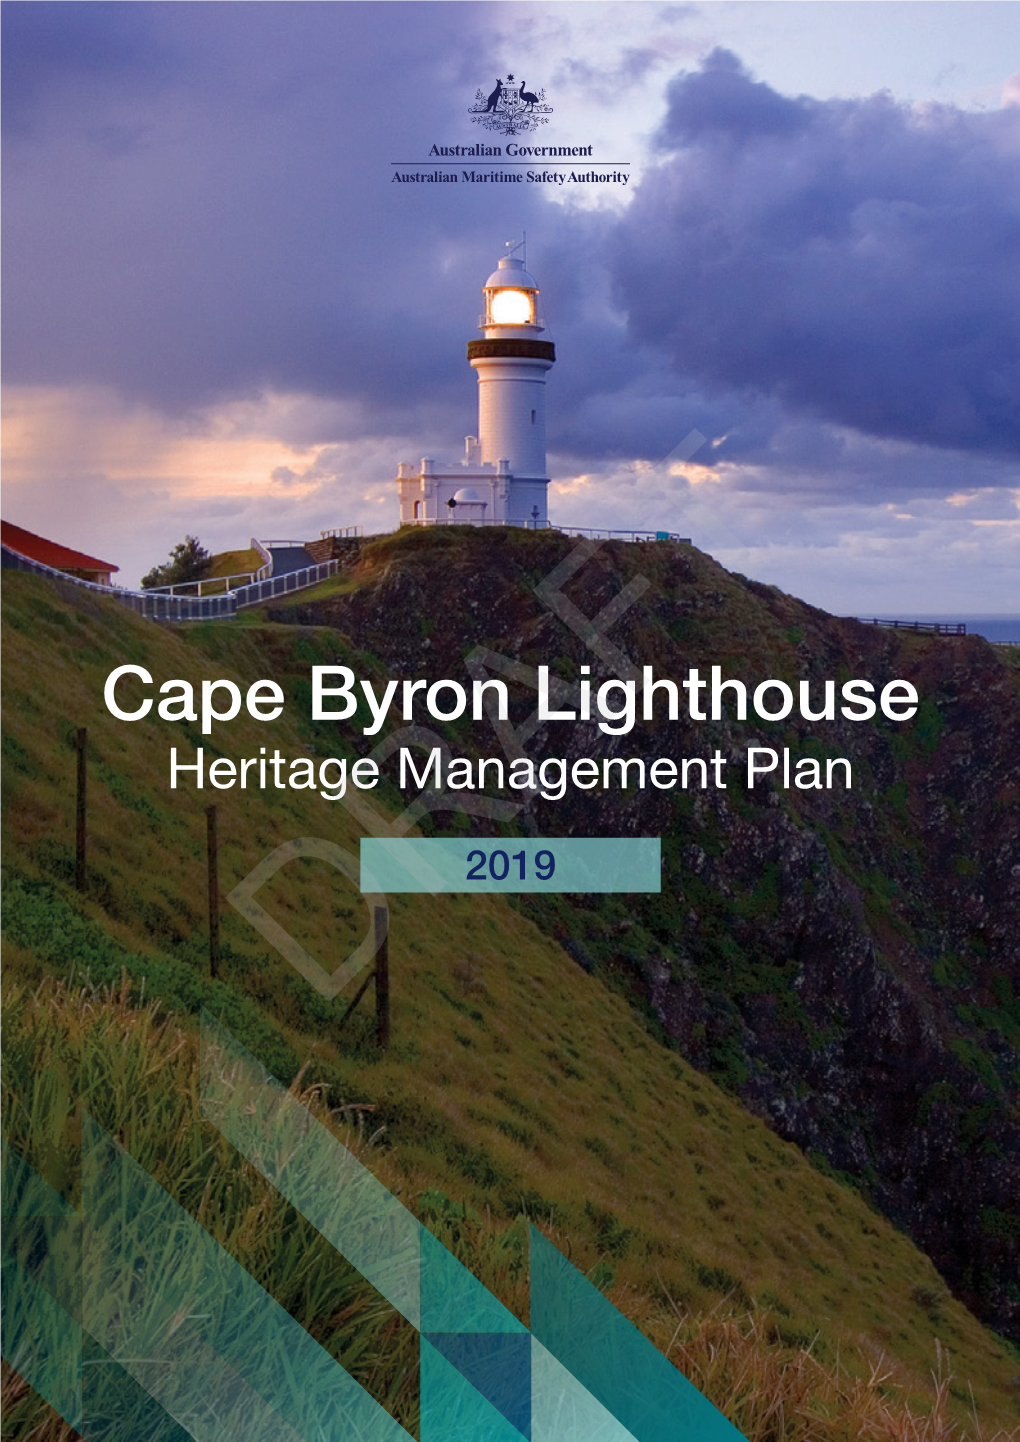 Cape Byron Lighthouse Heritage Management Plan 2019